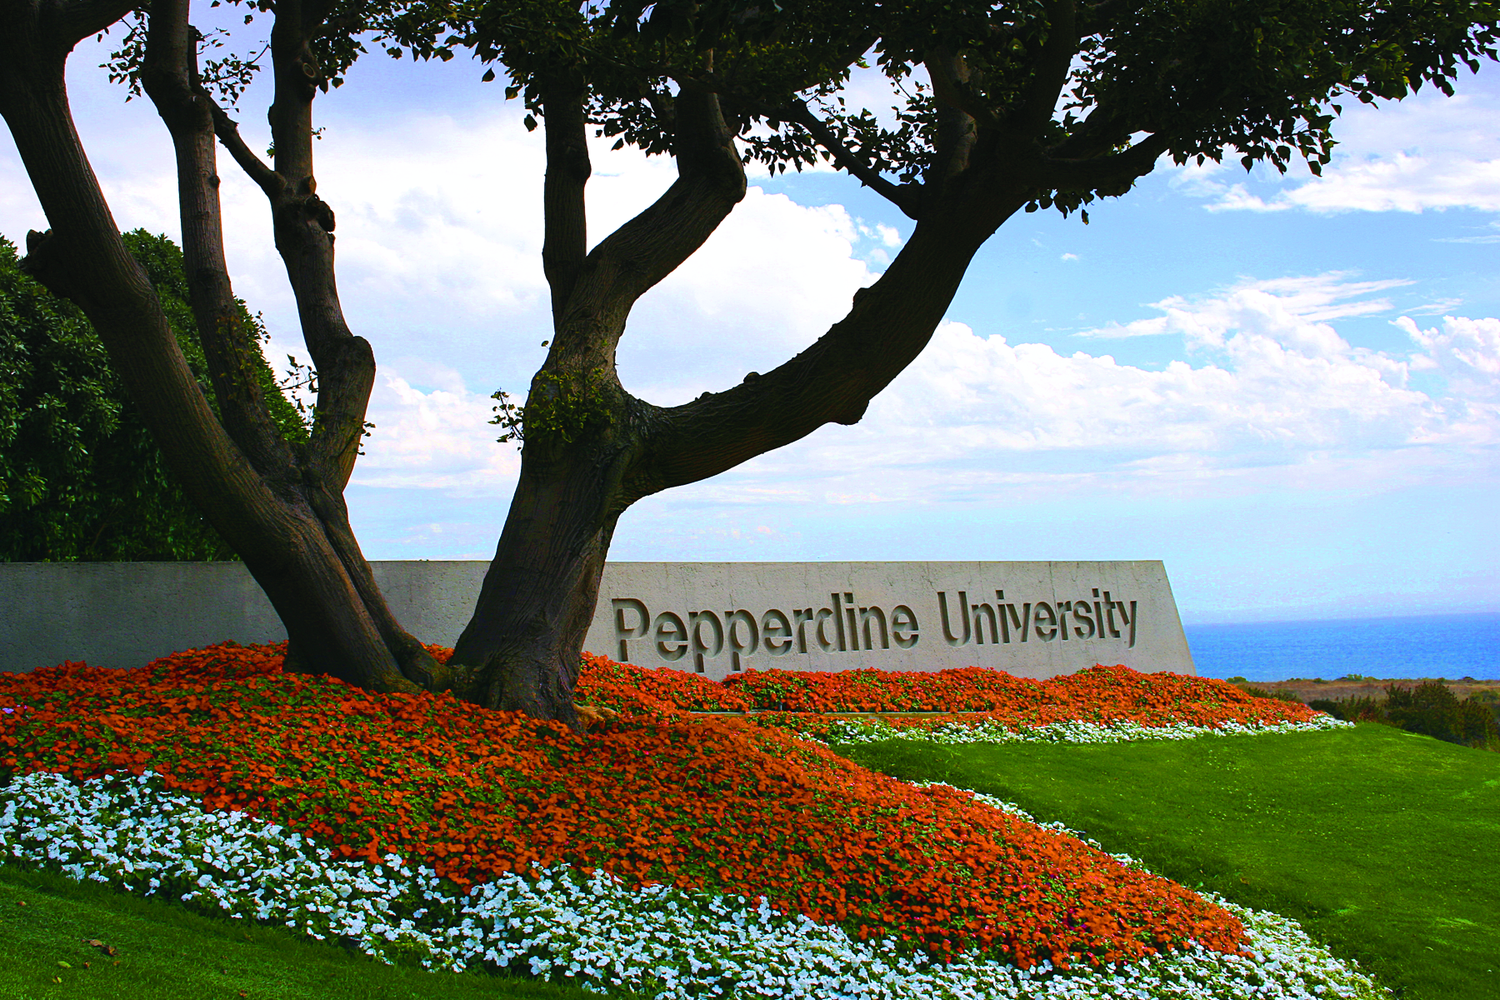 Image of Pepperdine University name on lawn